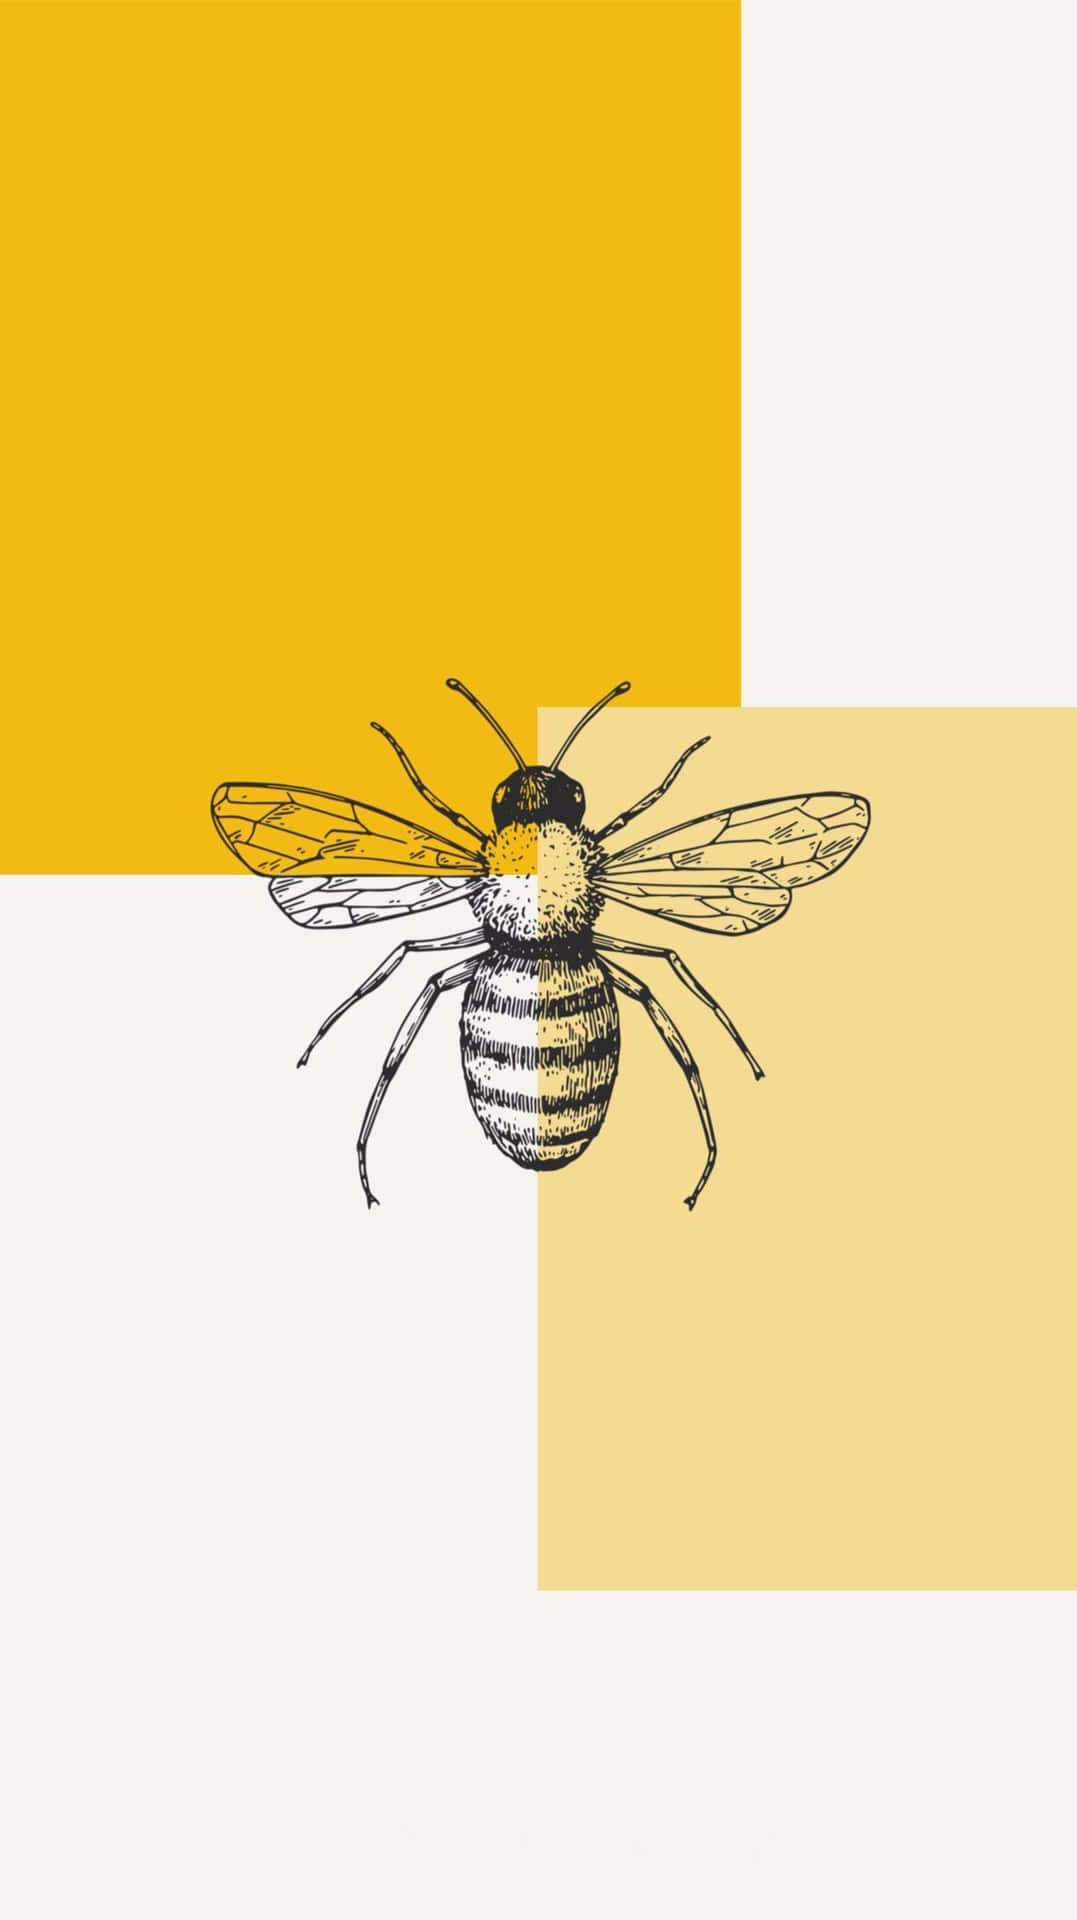 Caption: Buzzing Beauty on Screen - Bee iPhone Wallpaper Wallpaper